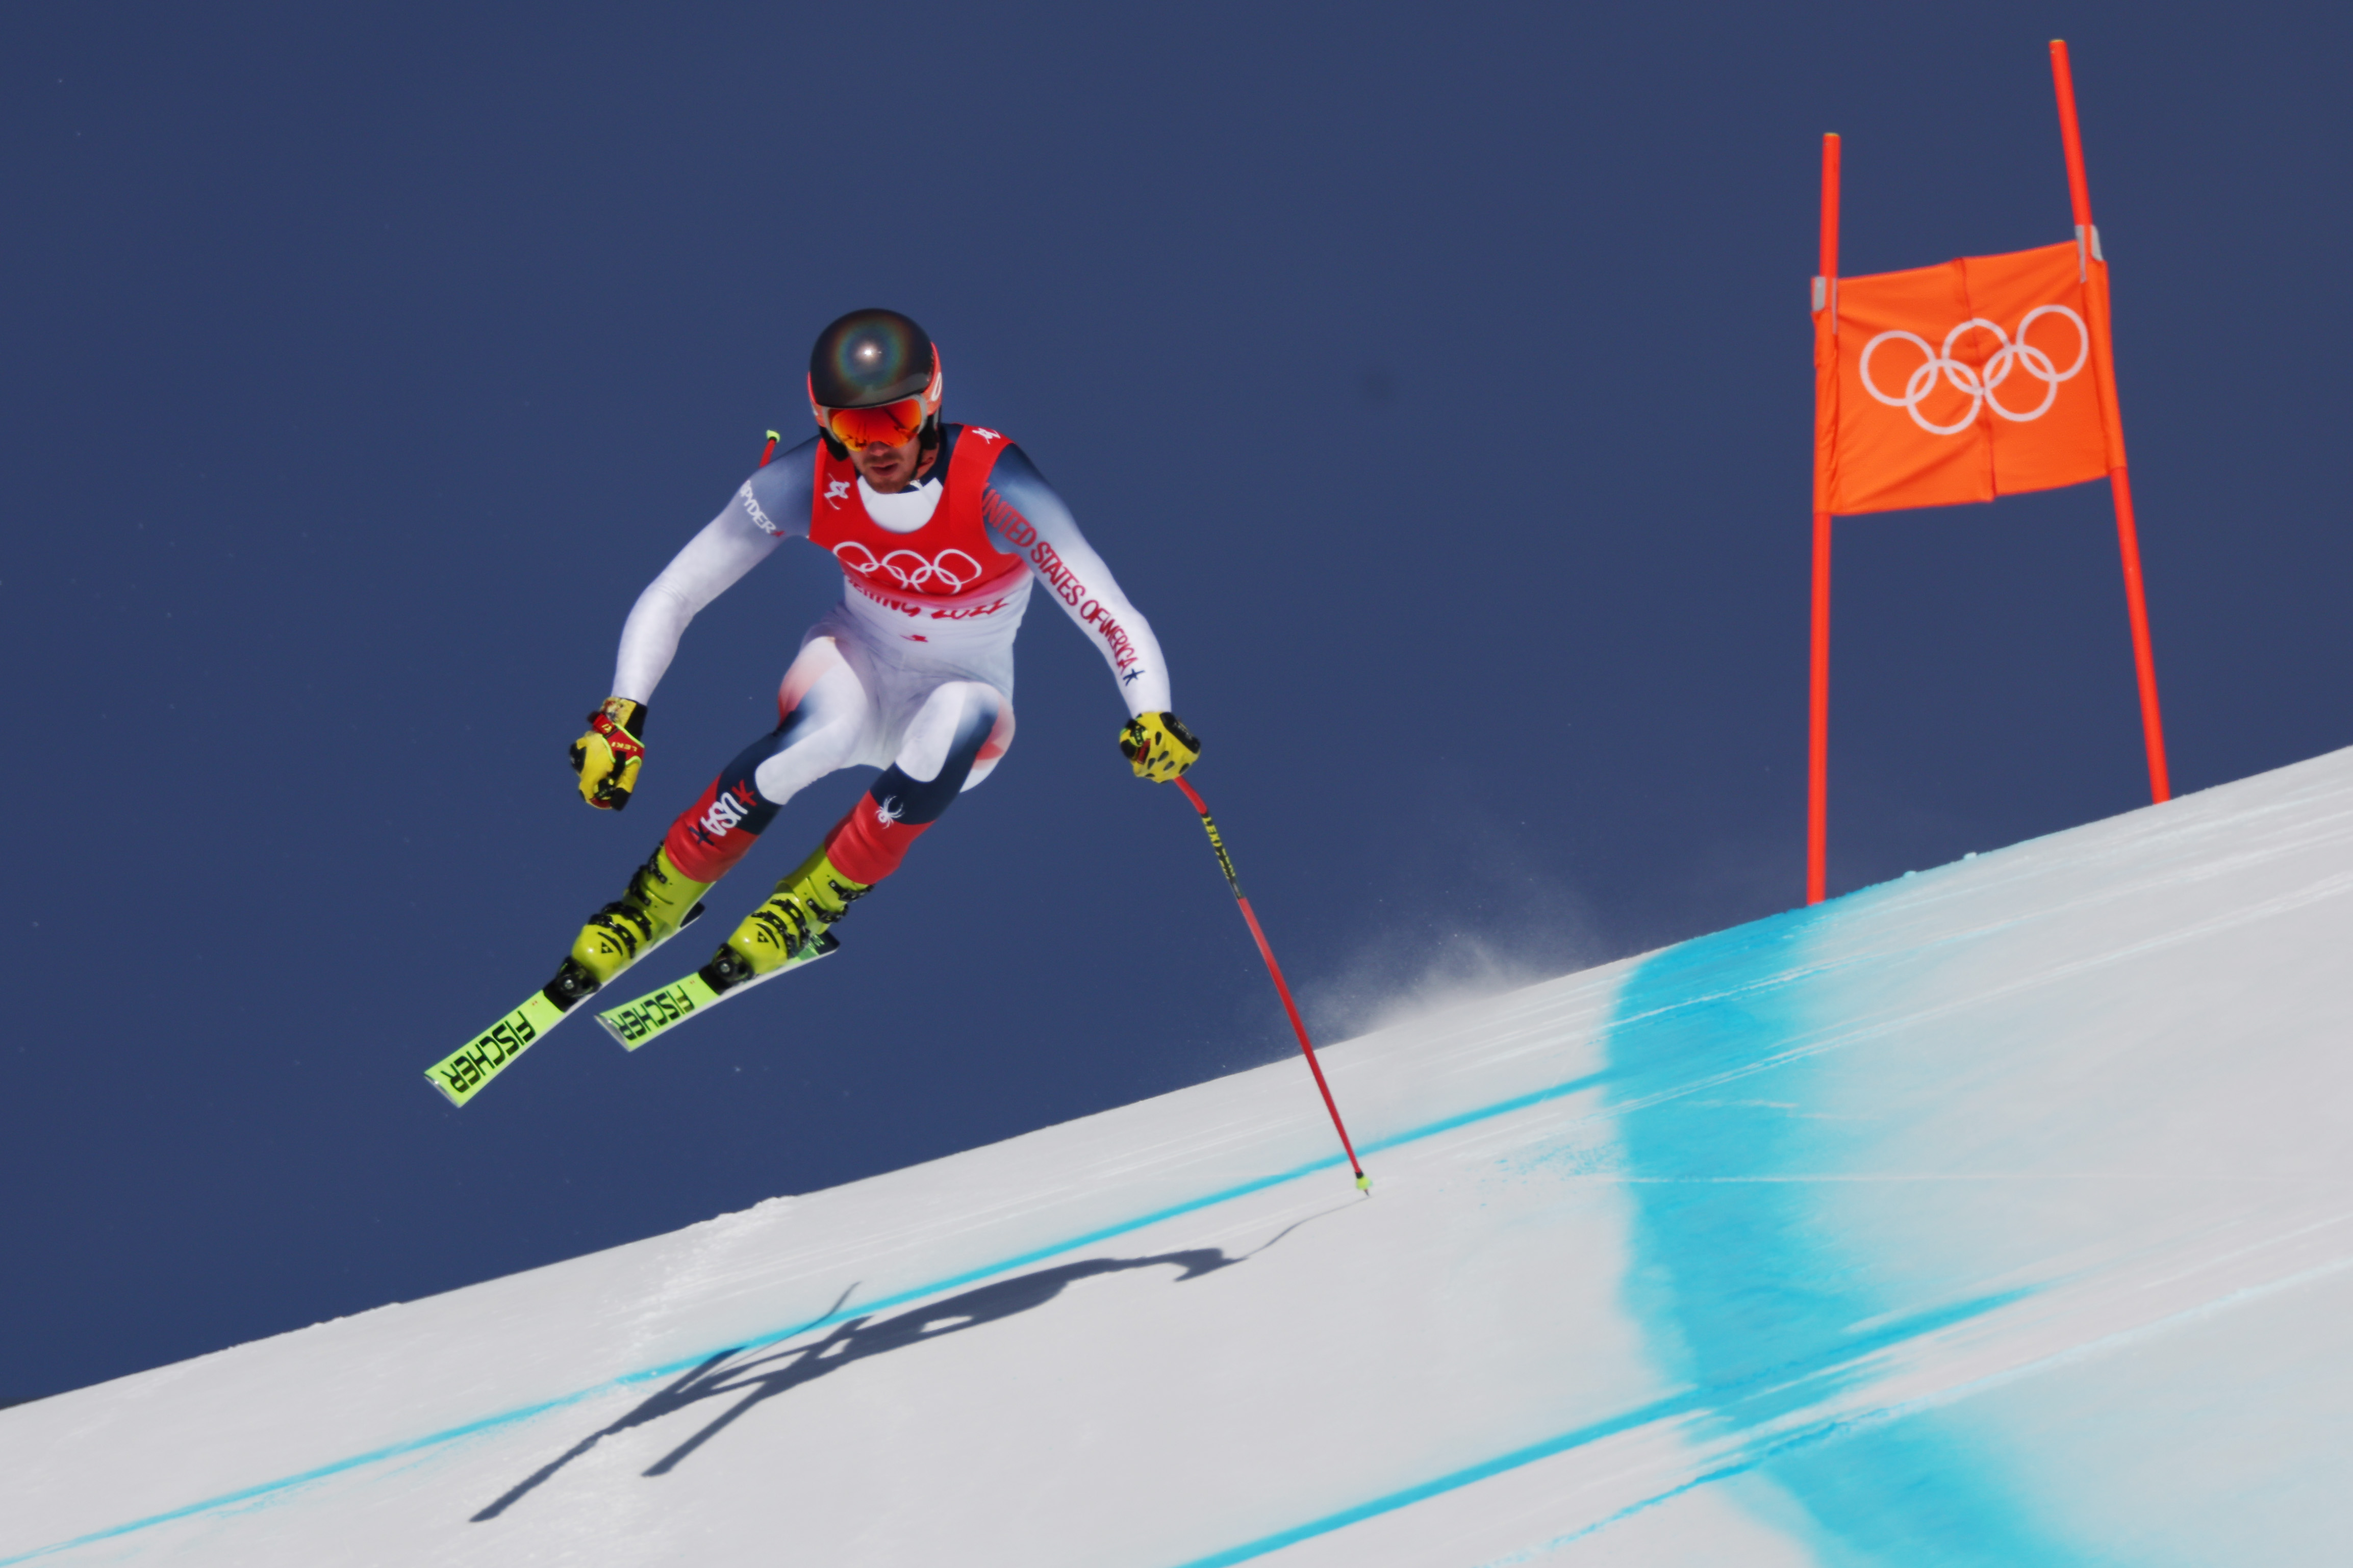 Cochran-Siegle Top Finish In Olympic Downhill